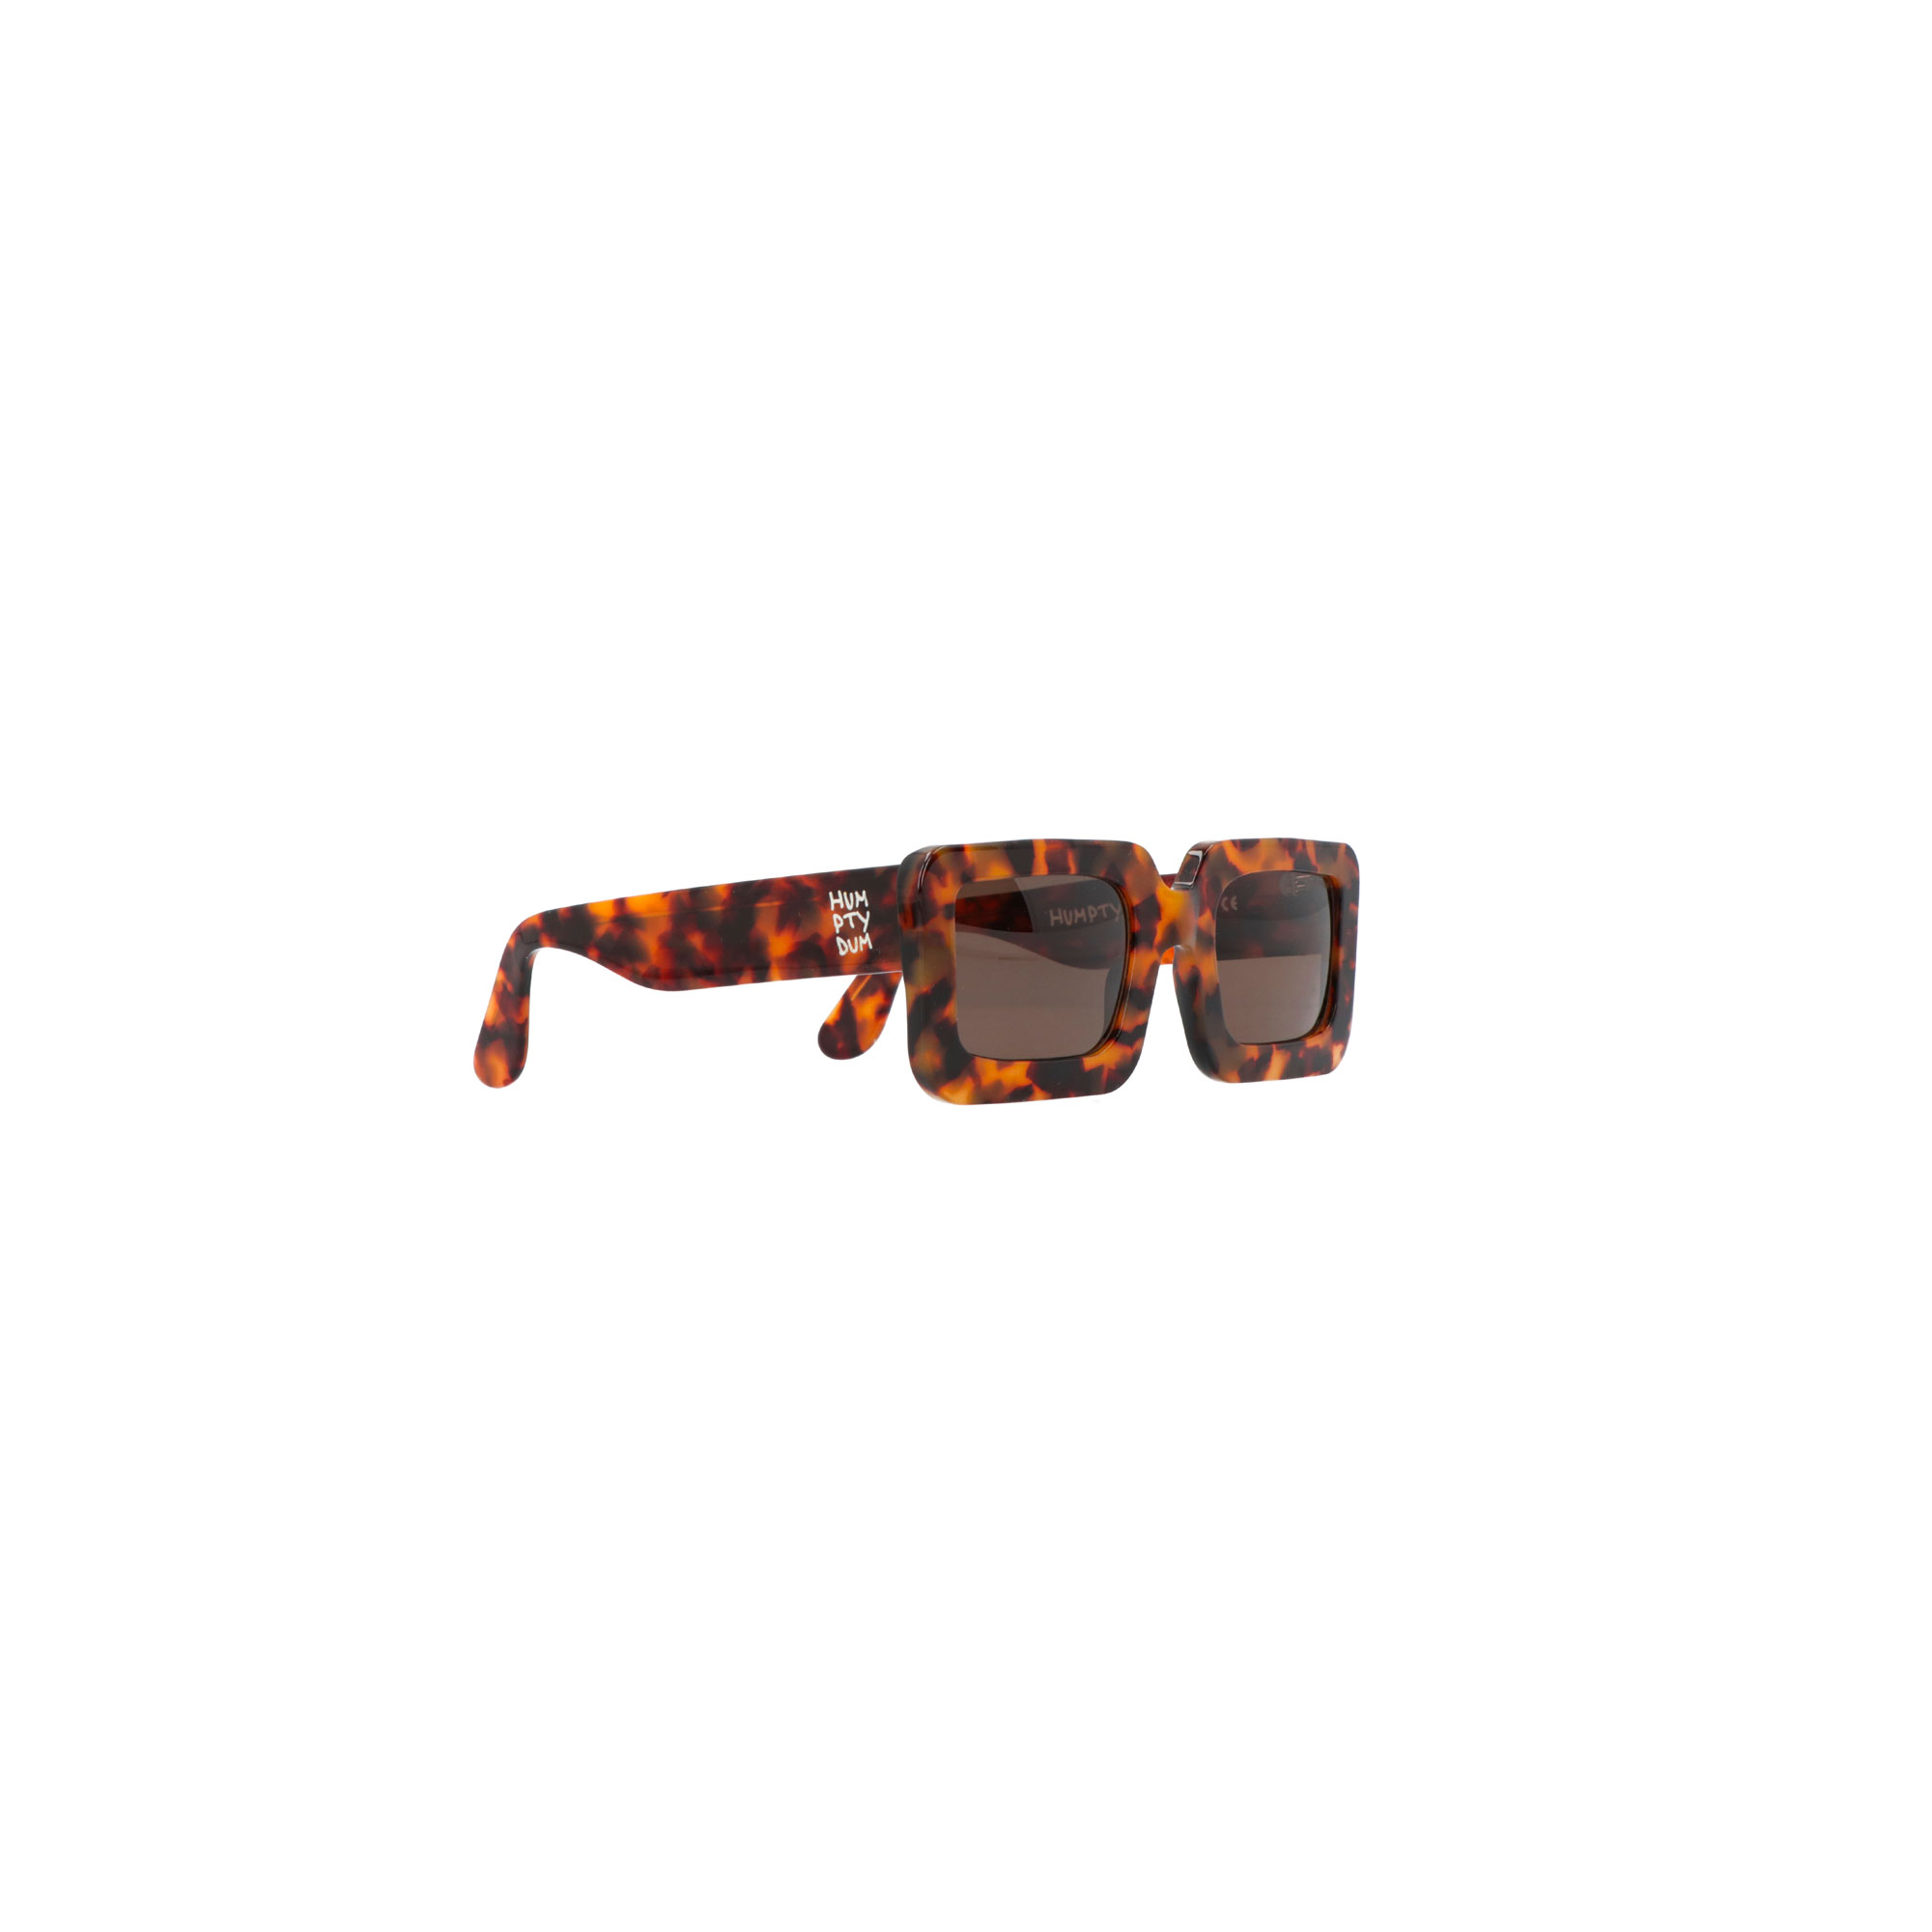 HumptyDum-Sunglasses-Acrimoniahumpty_21_org.jpg